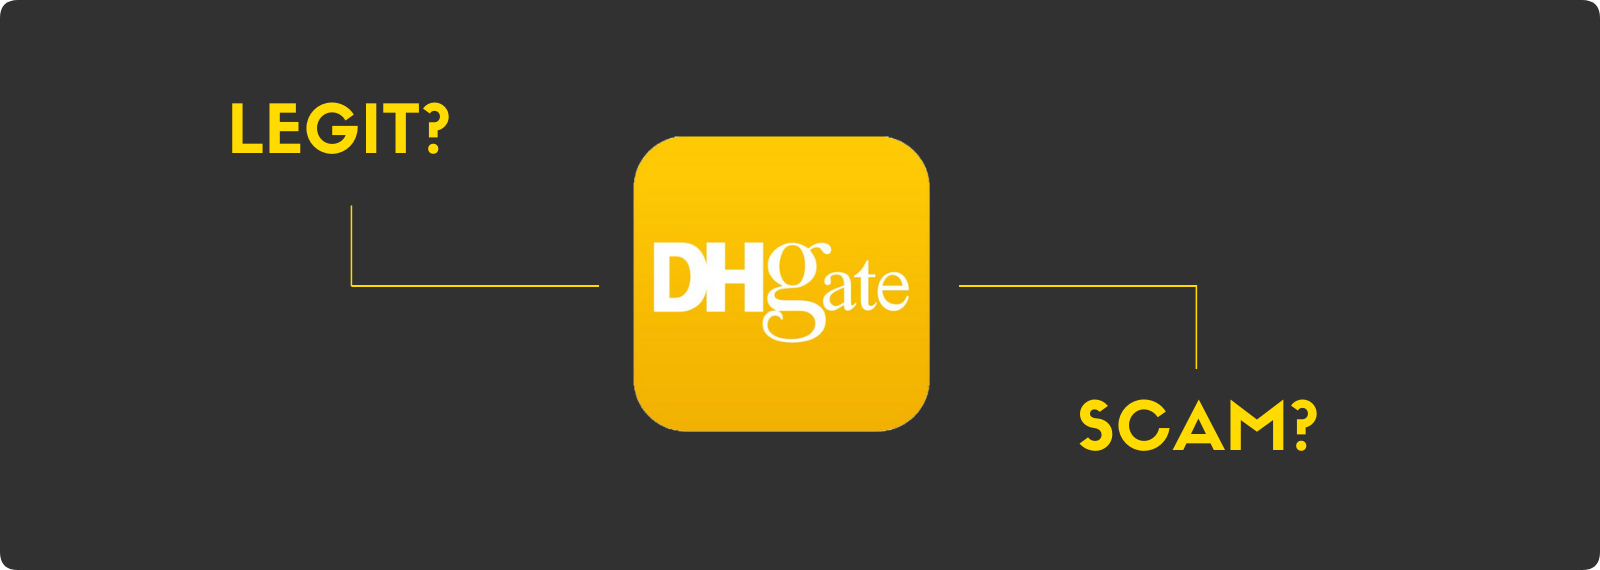 is dhgate safe